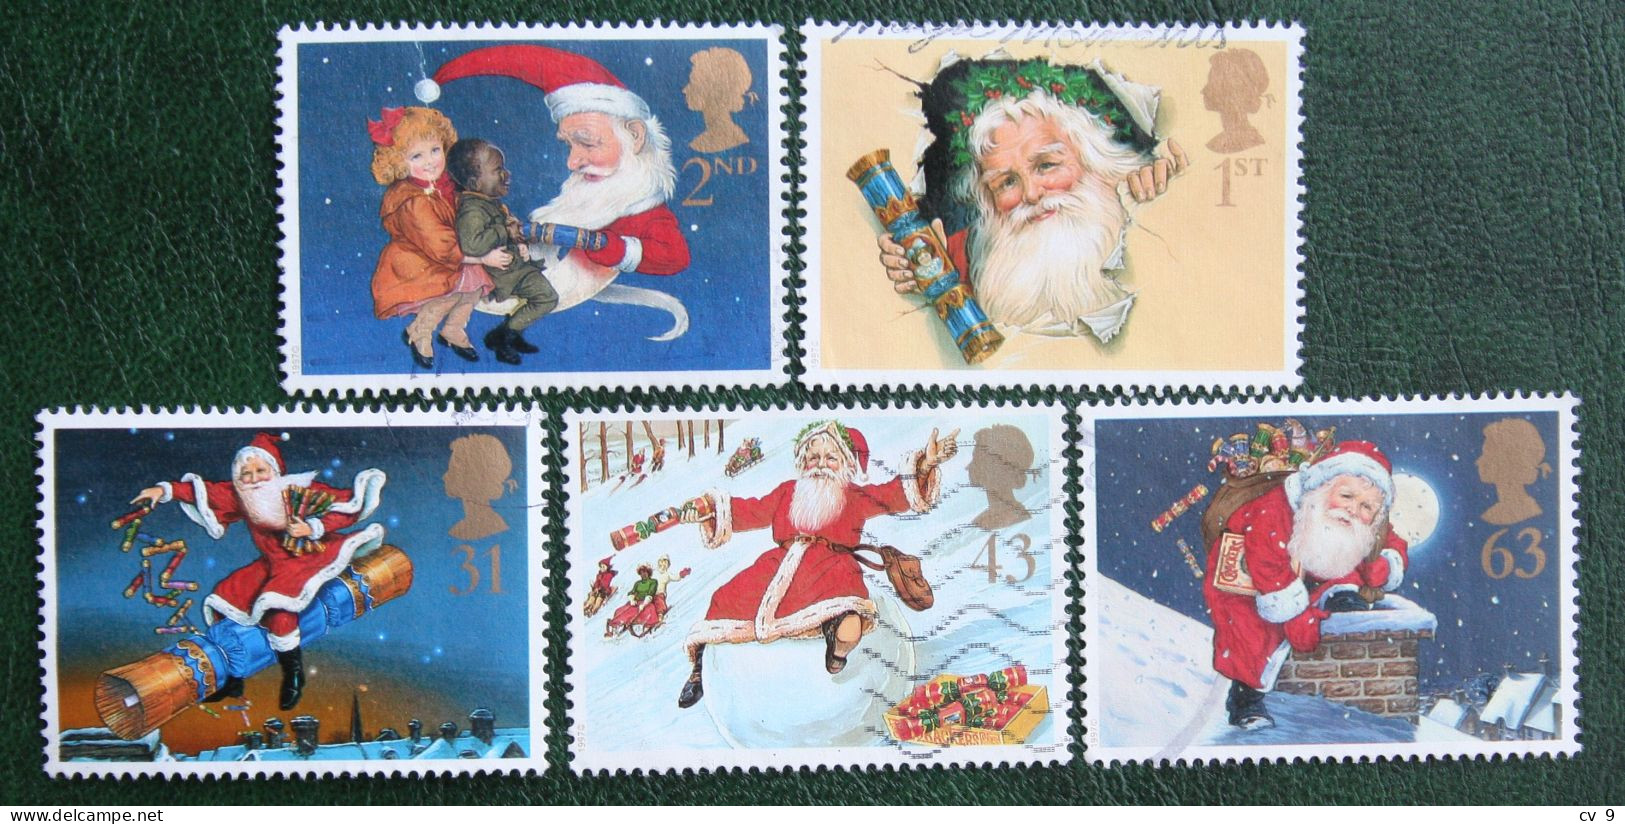 Natale Weihnachten Xmas Noel Kerst (Mi 1714-1718) 1997 Used Gebruikt Oblitere ENGLAND GRANDE-BRETAGNE GB GREAT BRITAIN - Usados